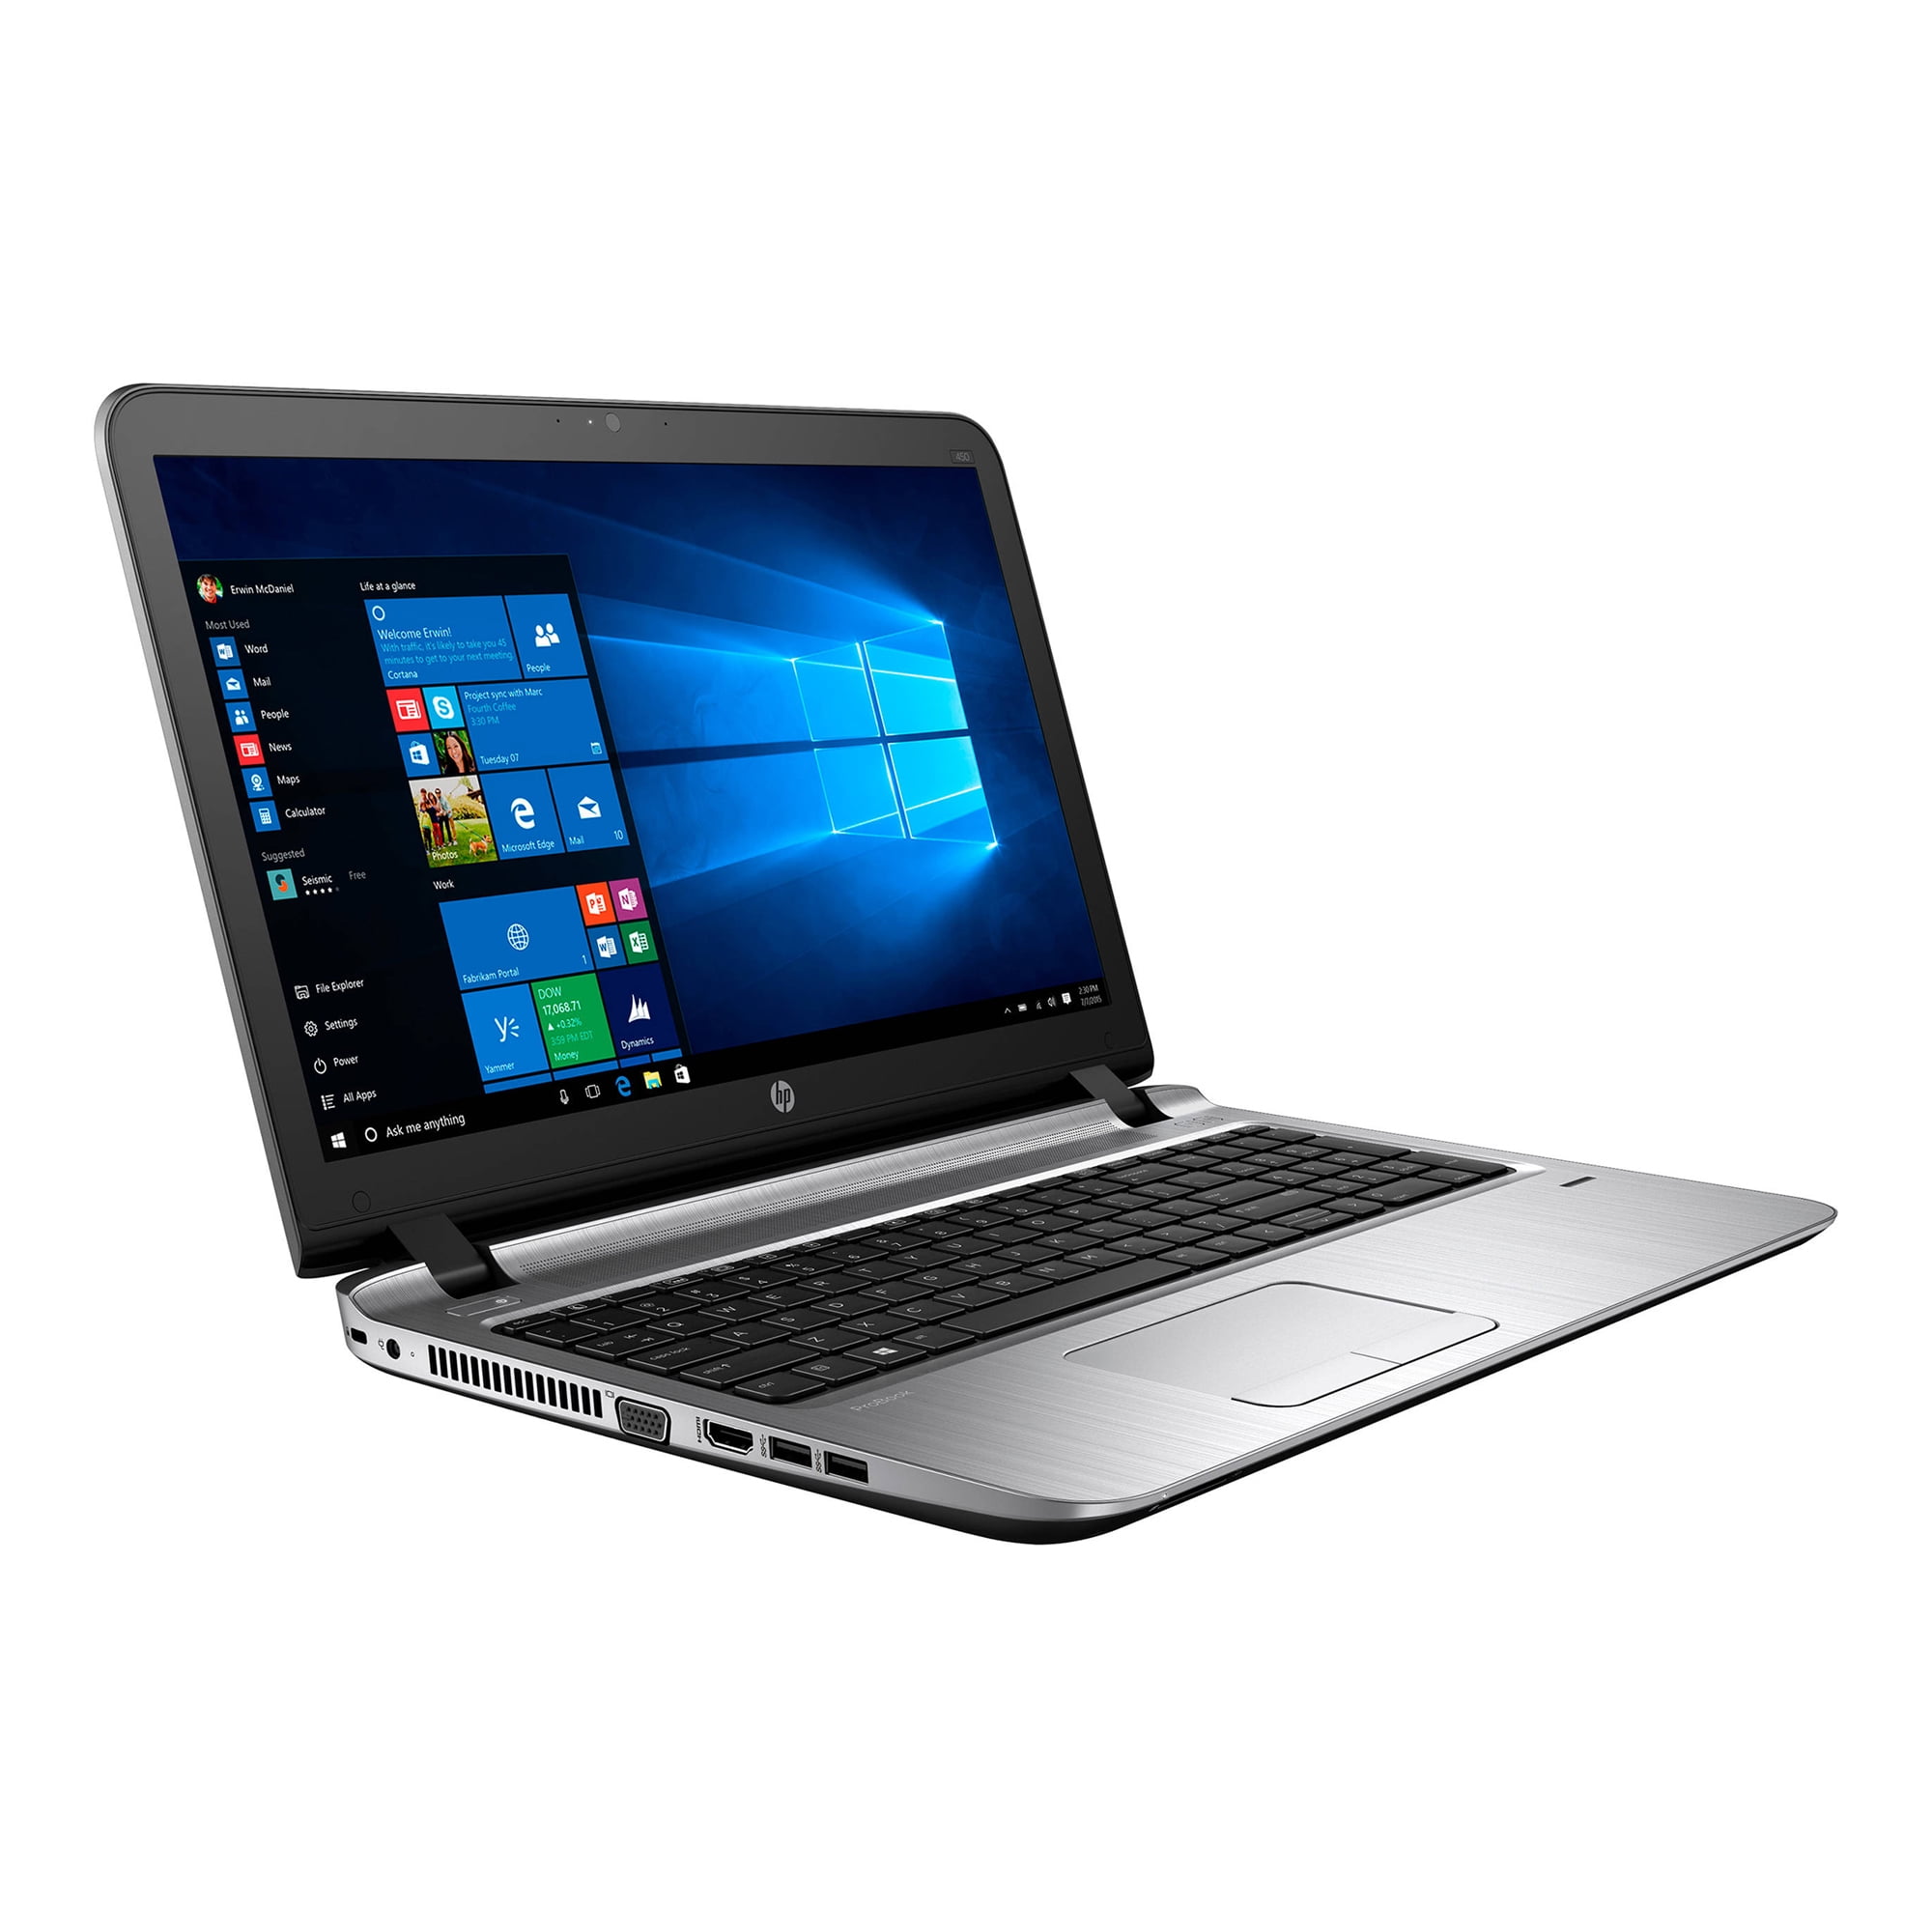 Afwijzen Ambitieus Hijgend Used - HP ProBook 450 G3, 15.6" FHD Laptop, Intel Core i5-6200U @ 2.30 GHz,  8GB DDR3, NEW 240GB SSD, DVD-RW, Bluetooth, Webcam, No OS - Walmart.com